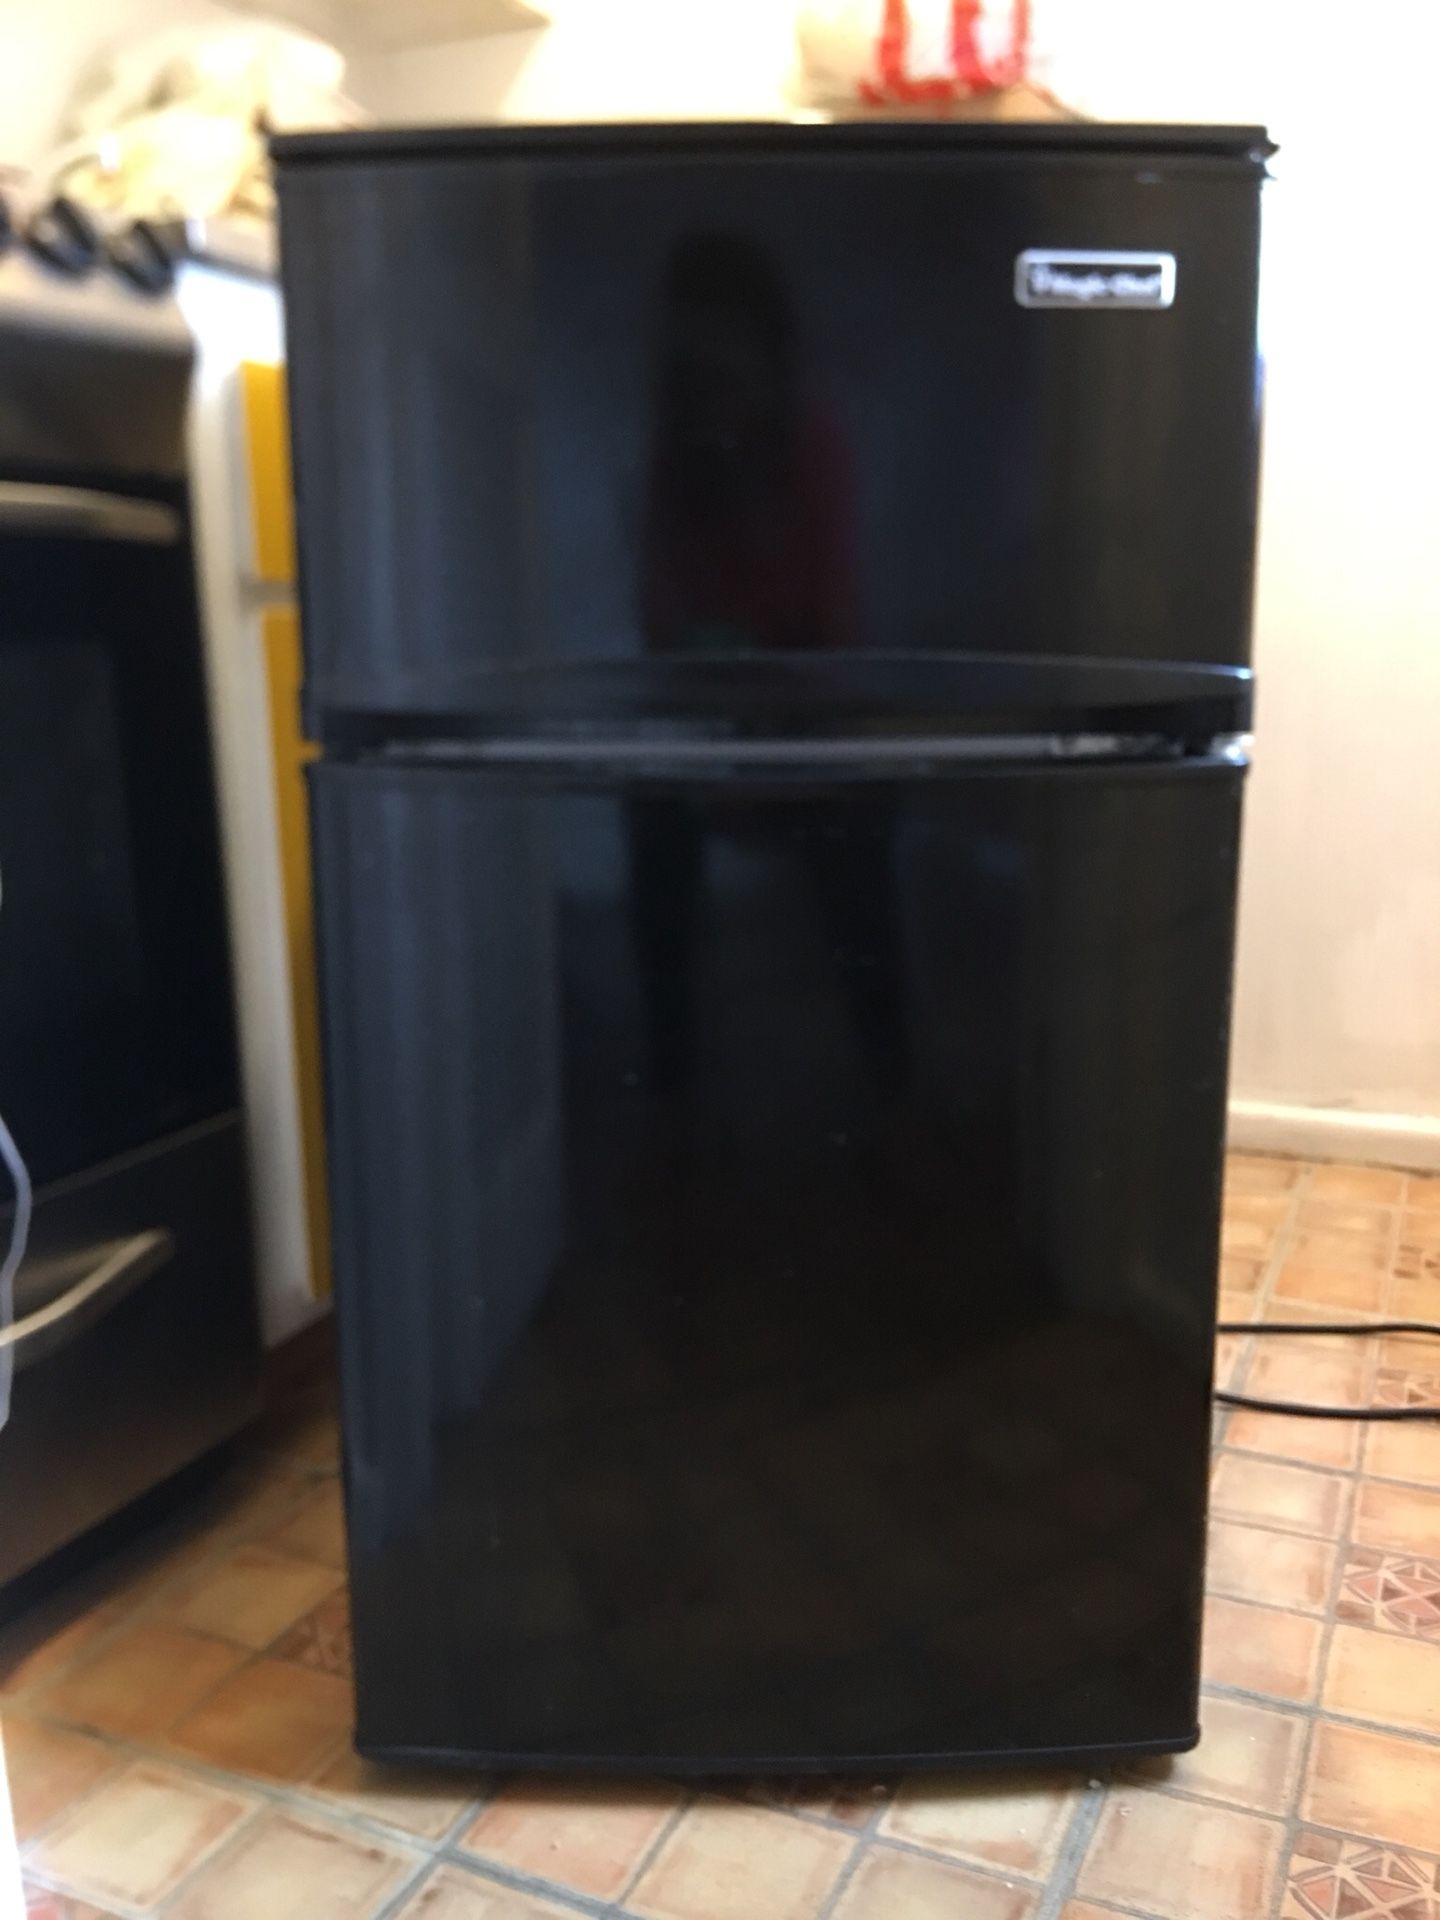 Mini Refrigerator - 3.1 cu ft Black